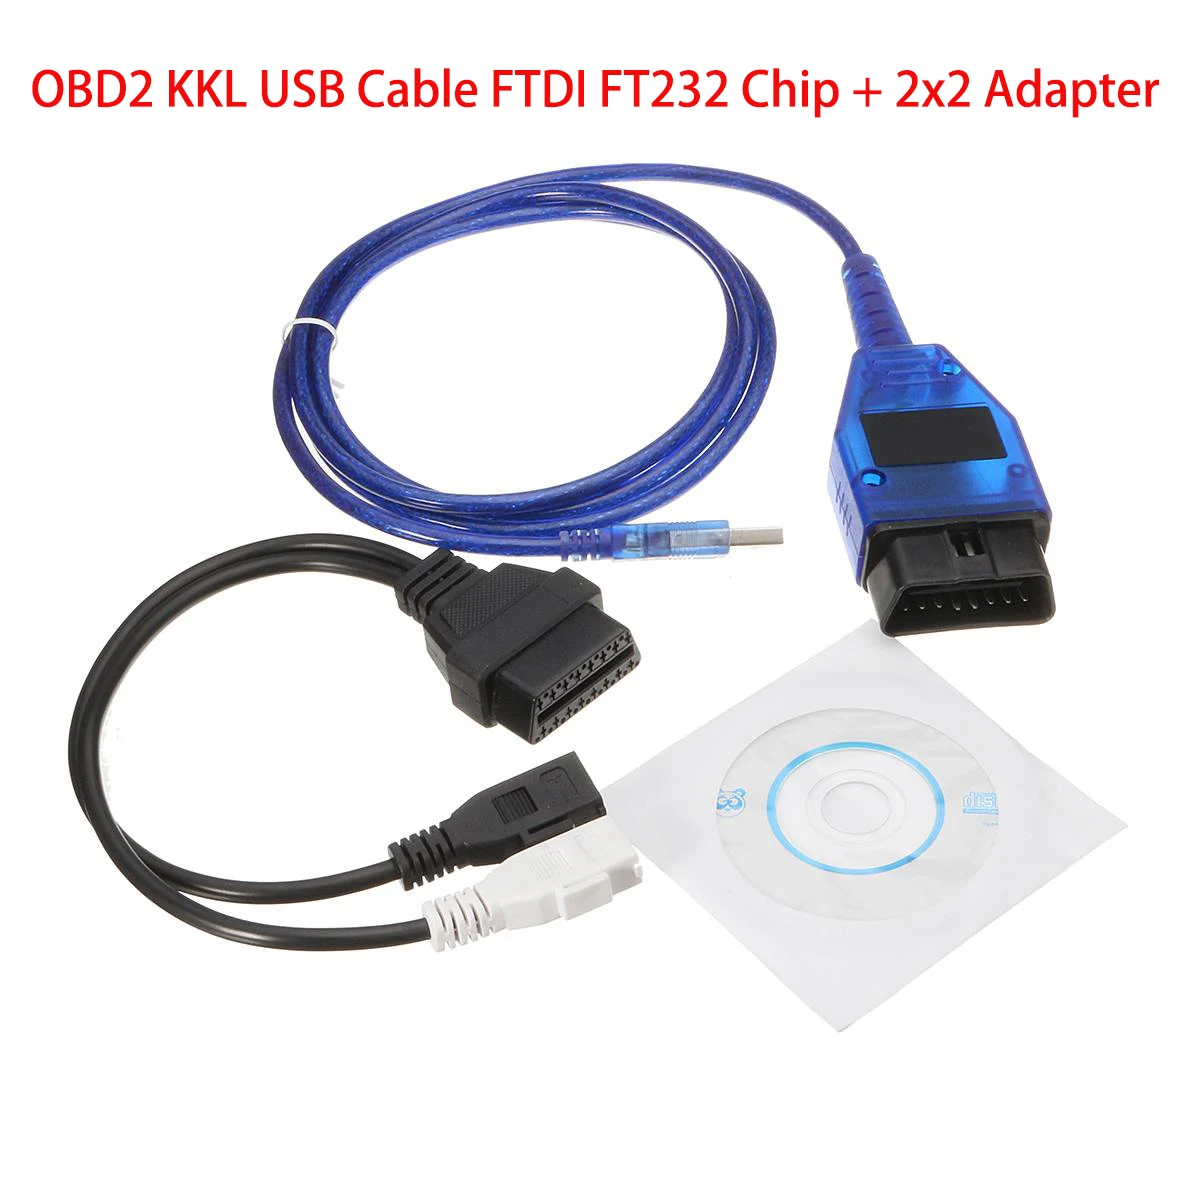 FTDI чип VAG 409-1 Vag-Com vag 409 kkl OBD2 USB кабель OBD сканер сканирующий инструмент интерфейс для Audi/Seat/VW/Skoda KKL 409 кабель